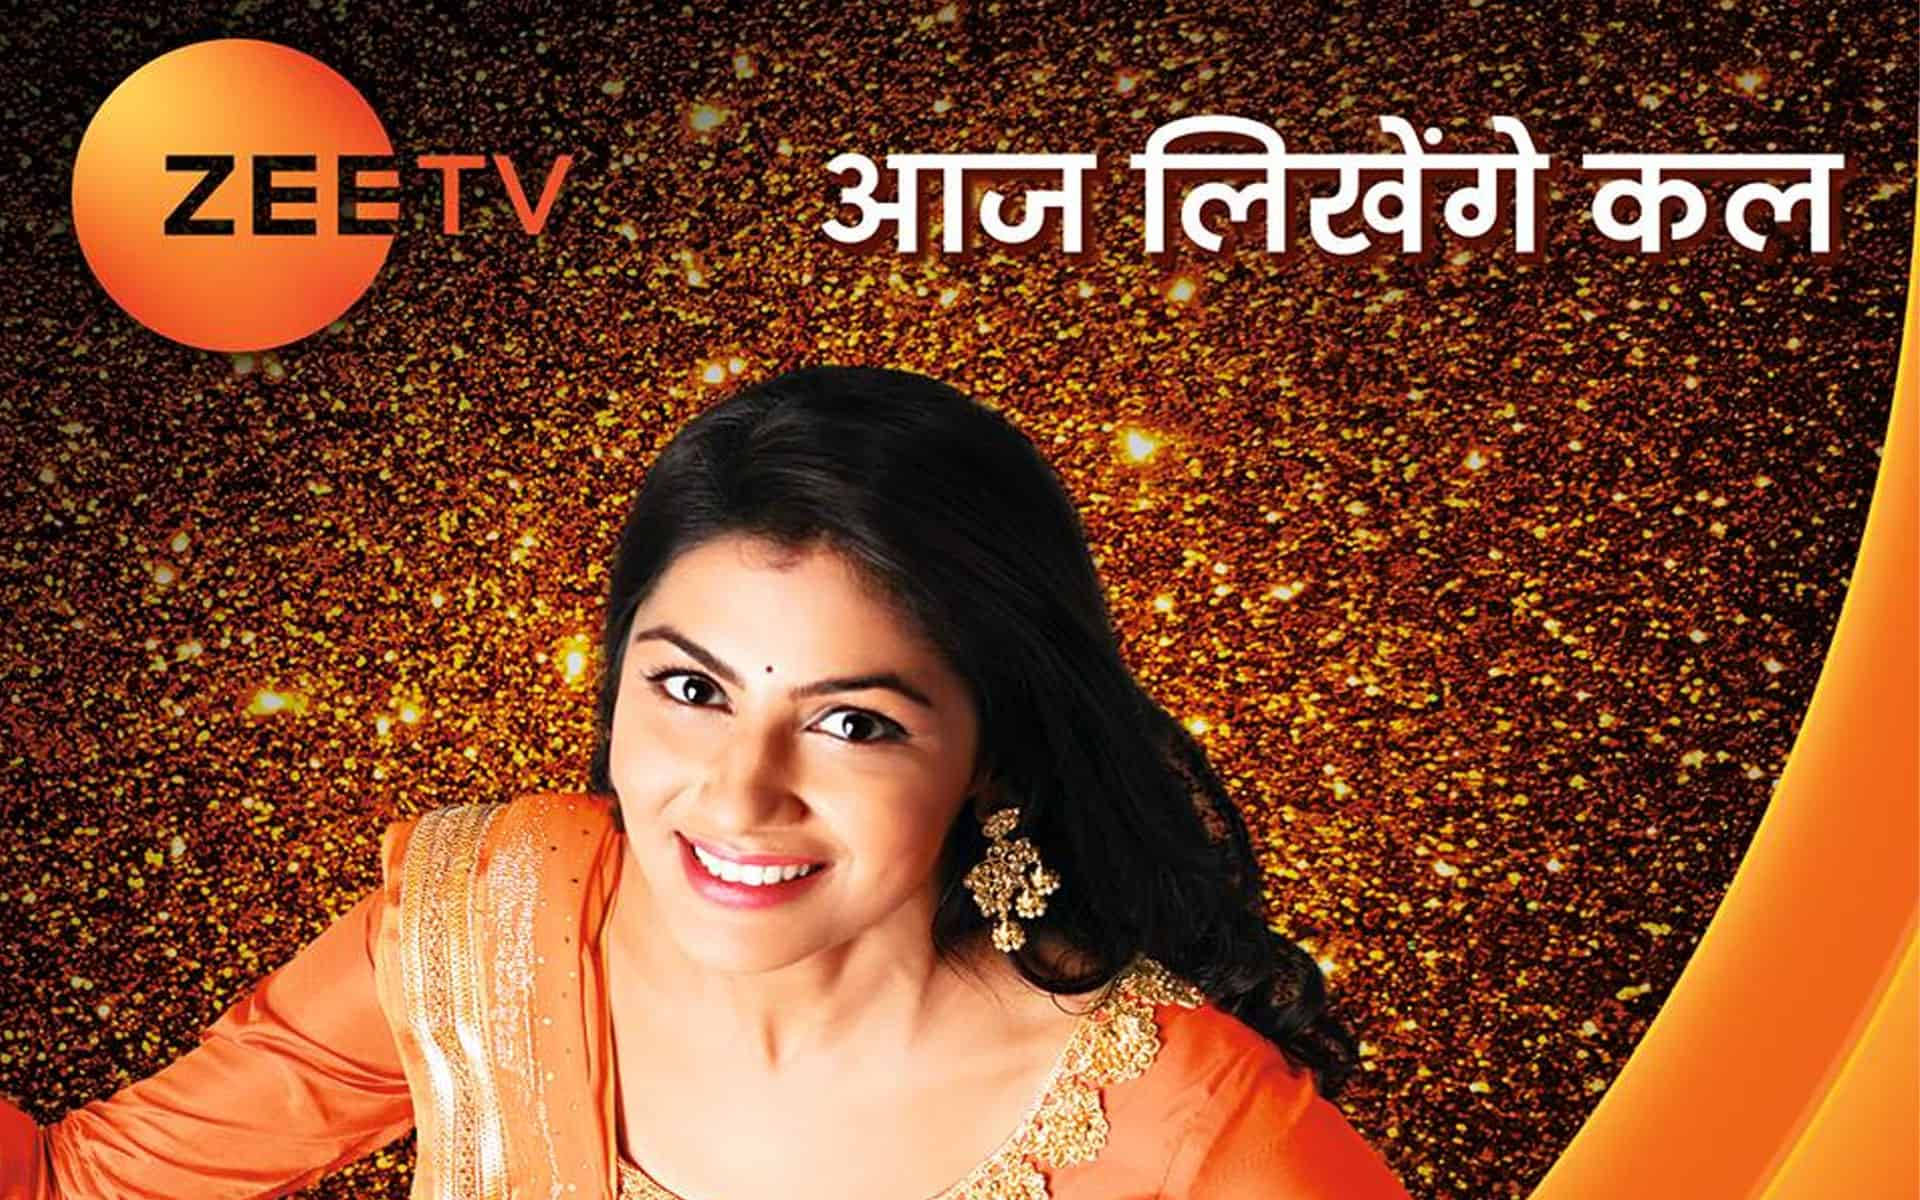 Sritijha Promovendo A Zee Tv. Papel de Parede